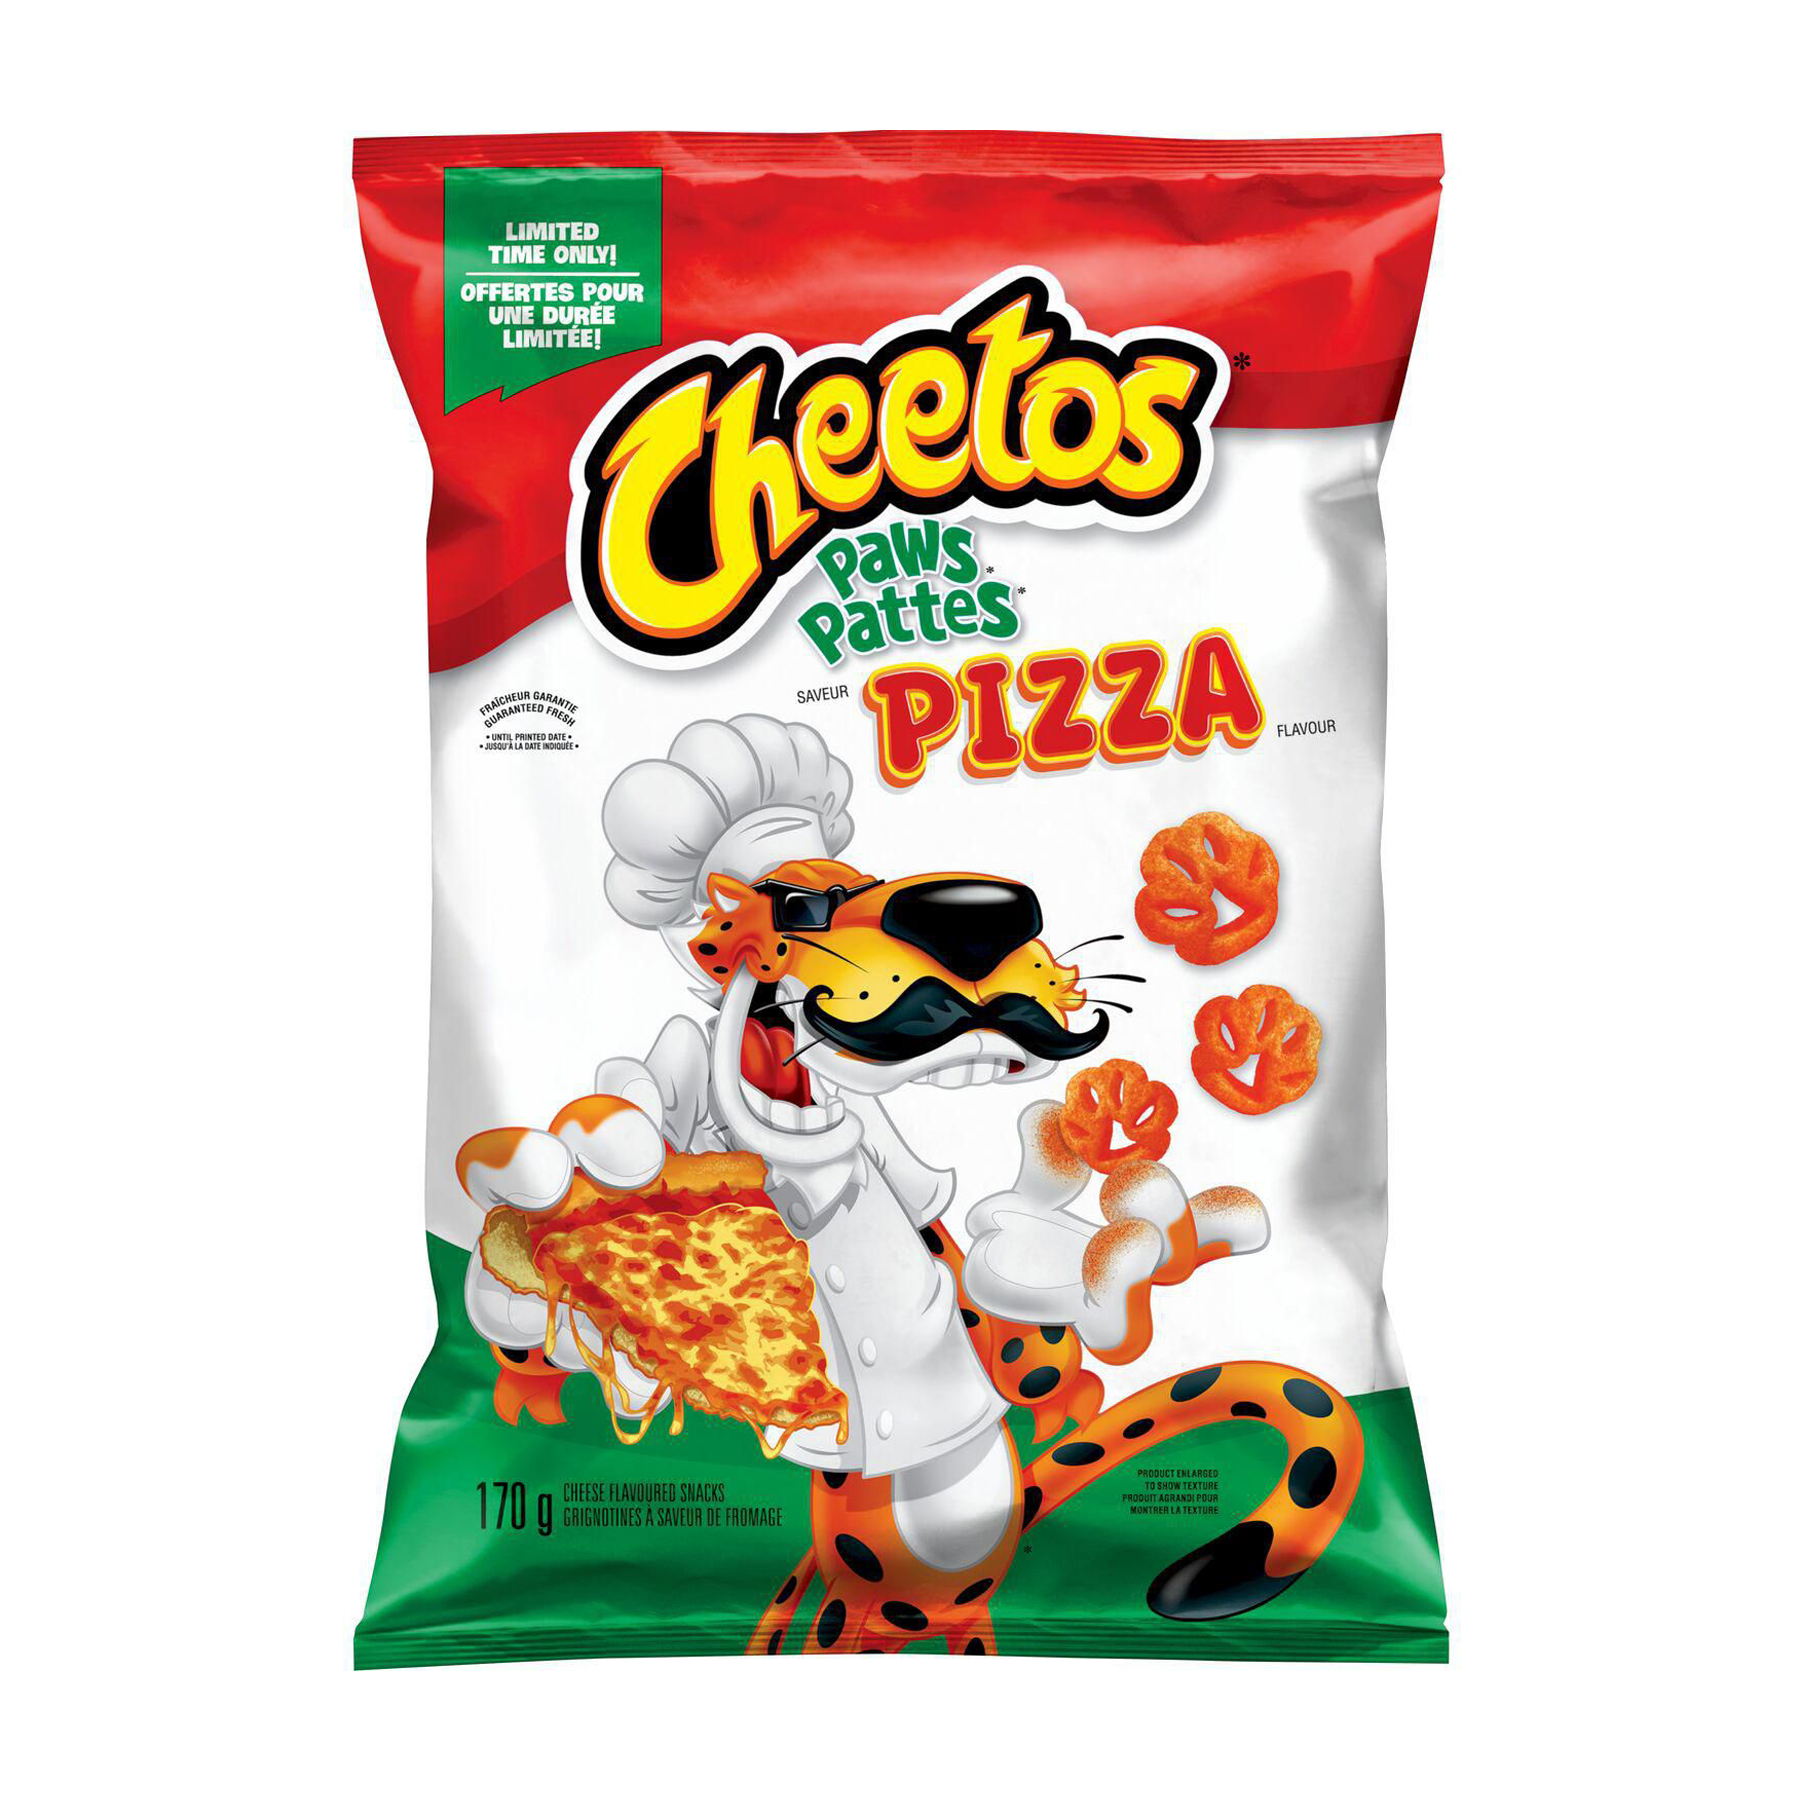 Cheetos Pizza Paws